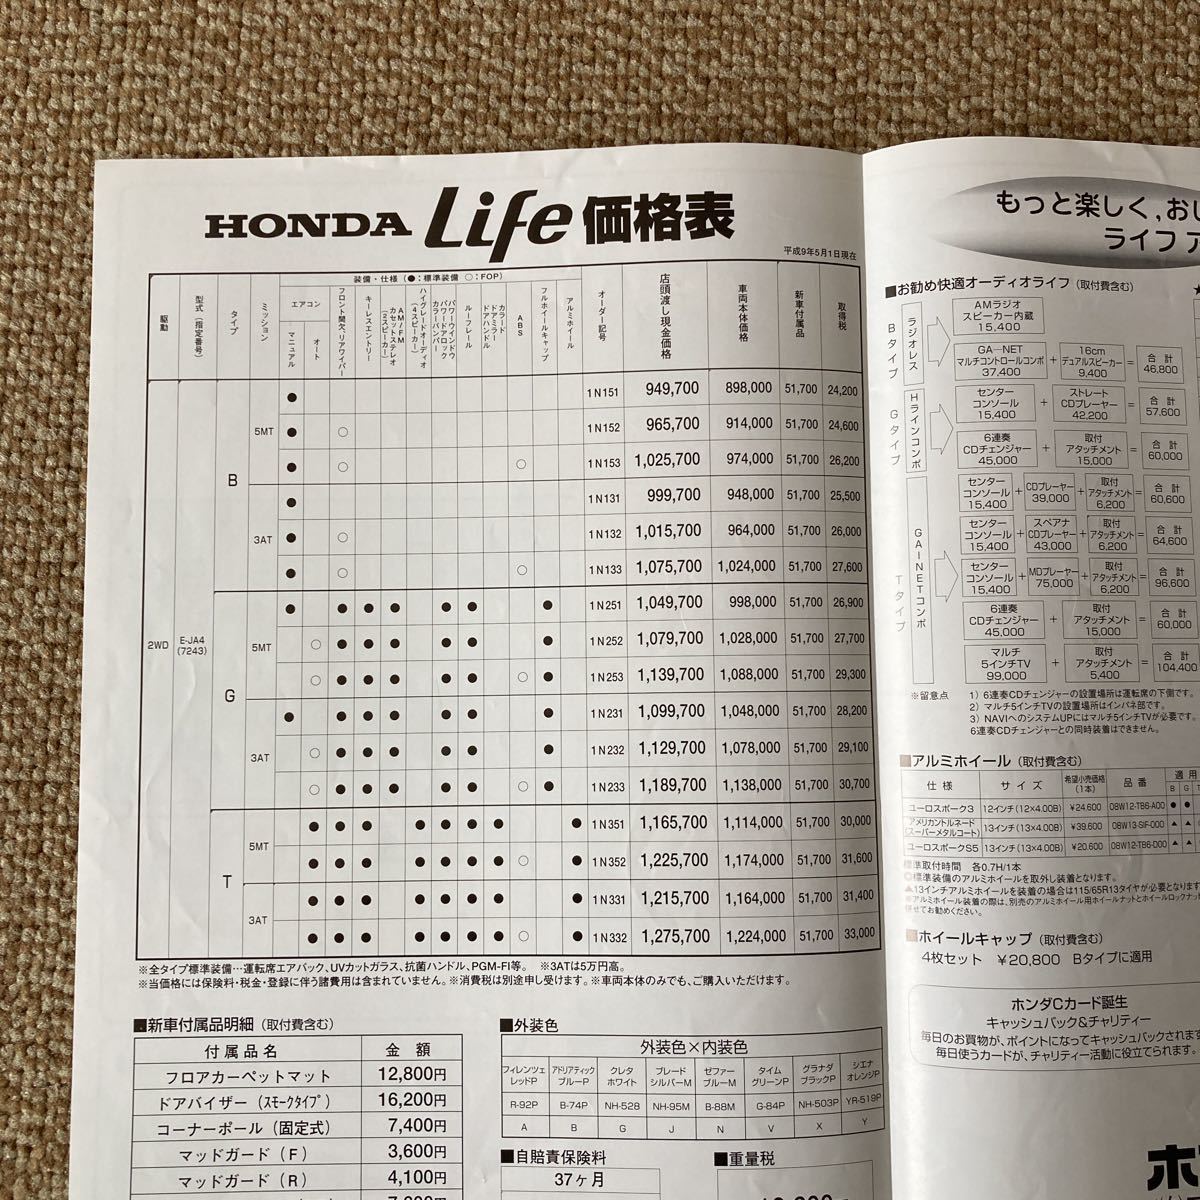  Honda Life catalog 1997 year 4 month 